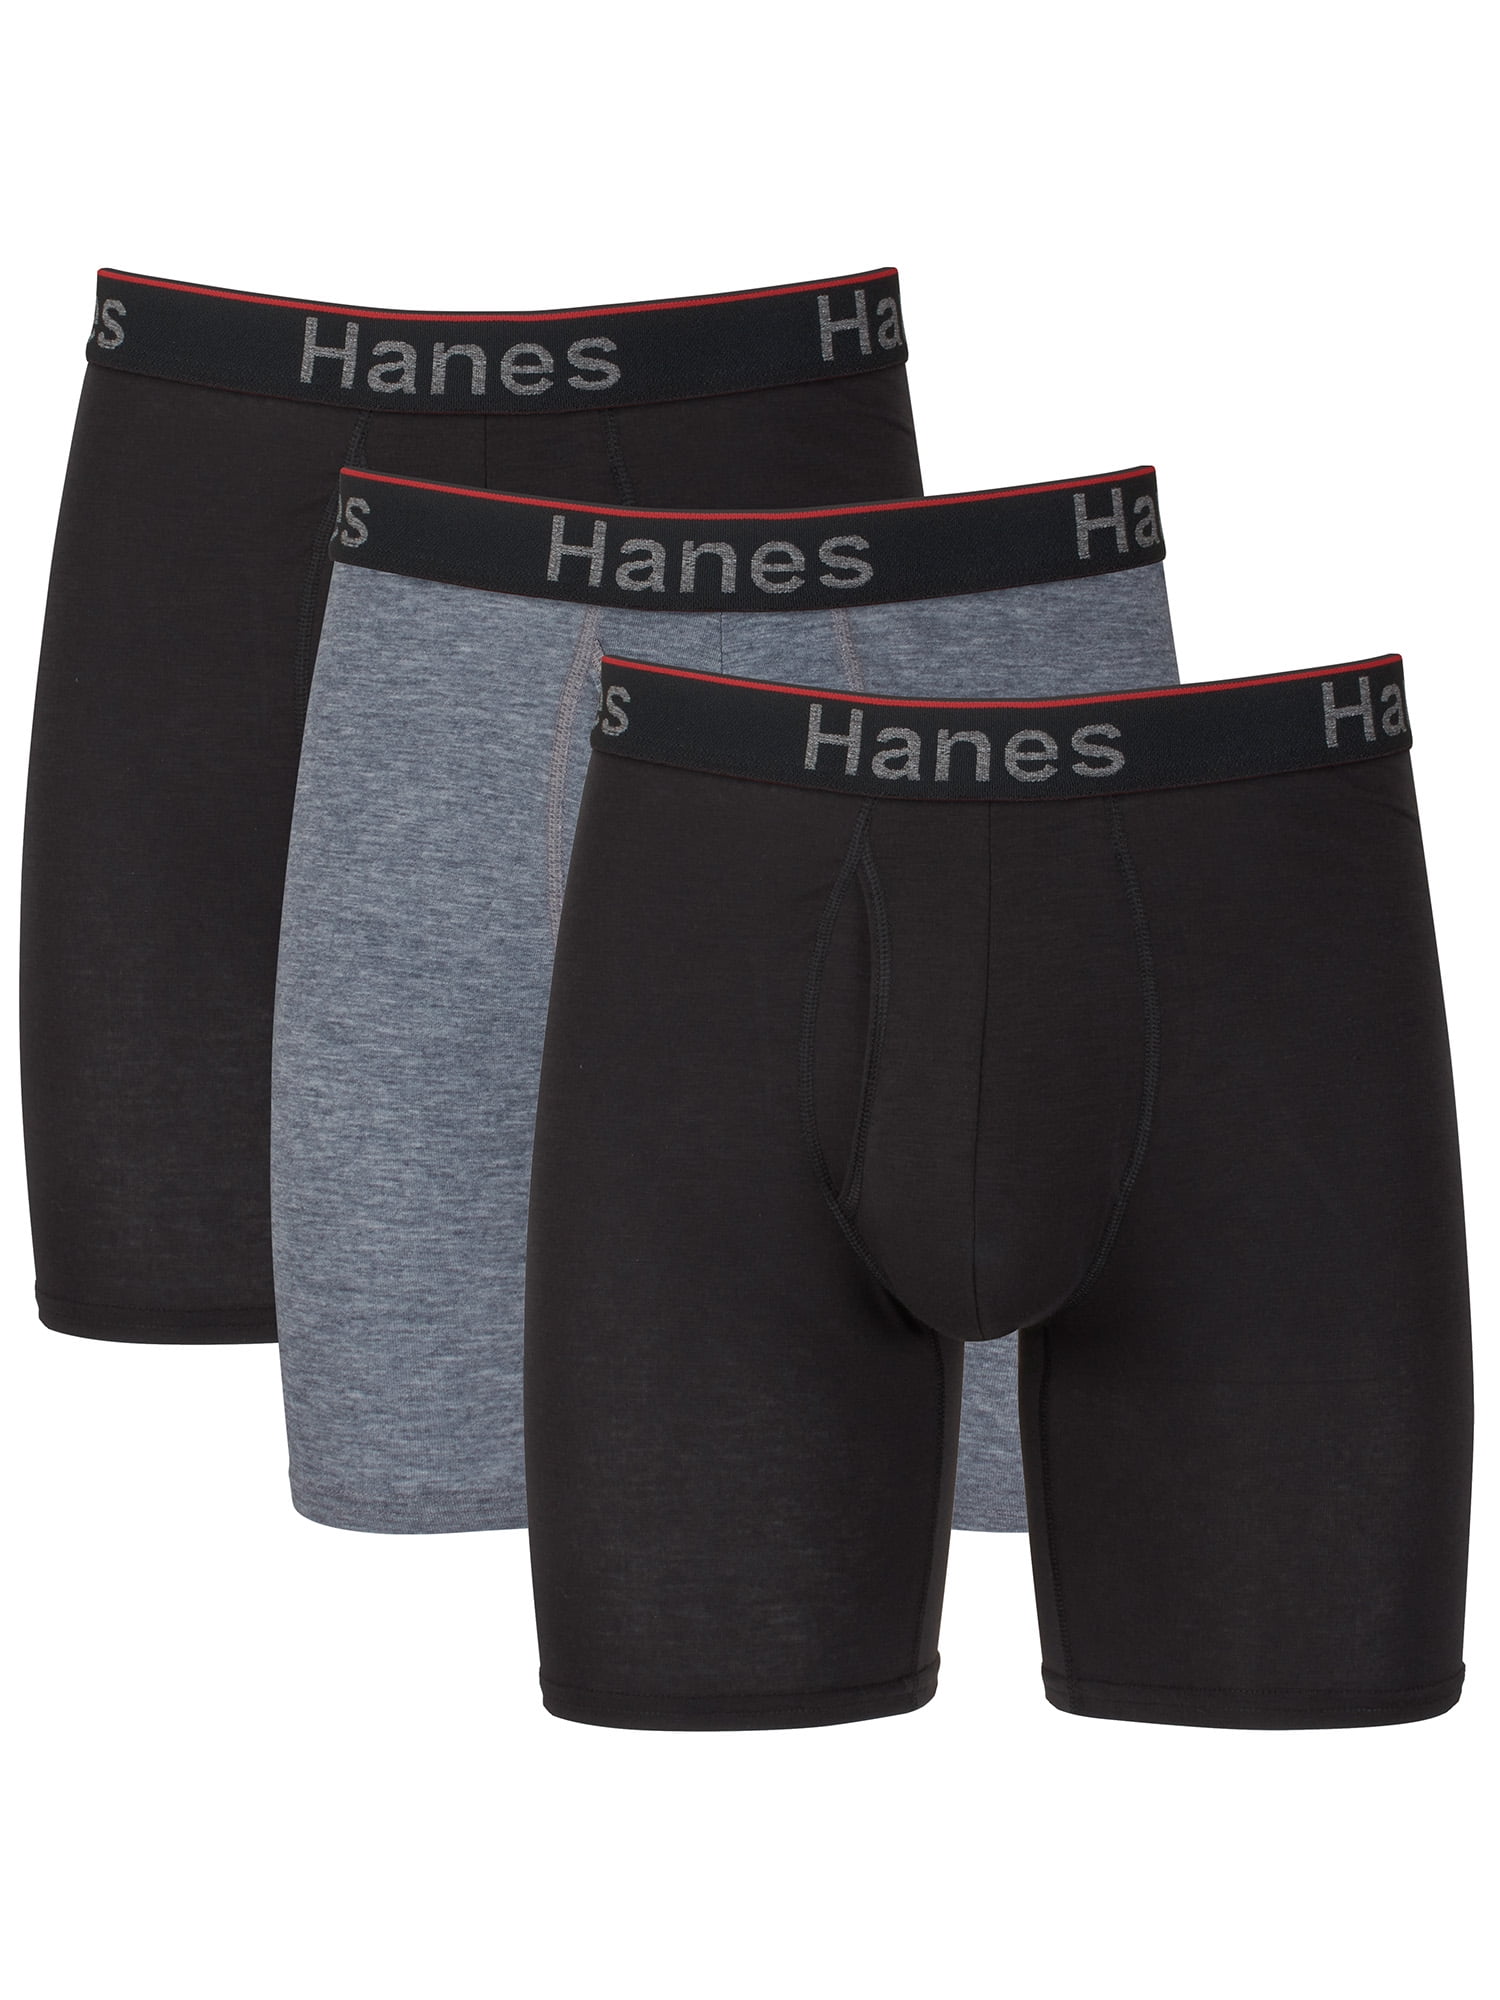 HanesBrands Inc. - Hanes Invites Men Everywhere to #VouchForThePouch with  New Comfort Flex Fit Men's Boxer Briefs